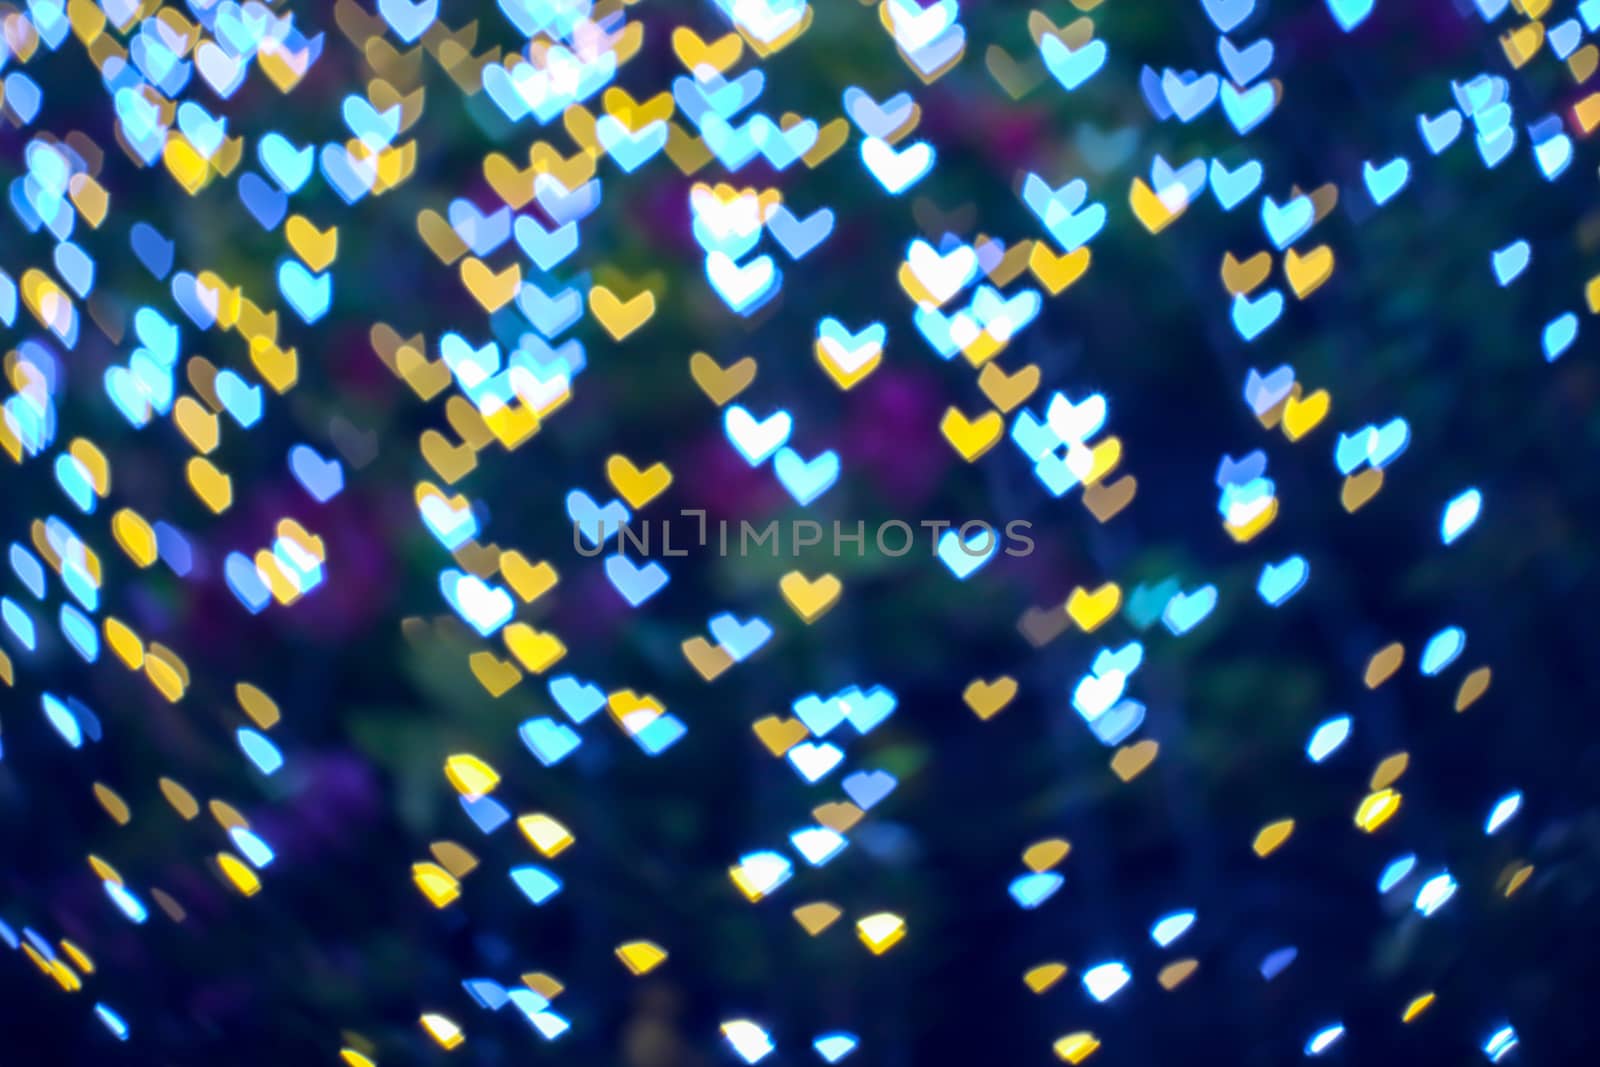 abstract blur bokeh heart shape love valentine day on tree in garden night light